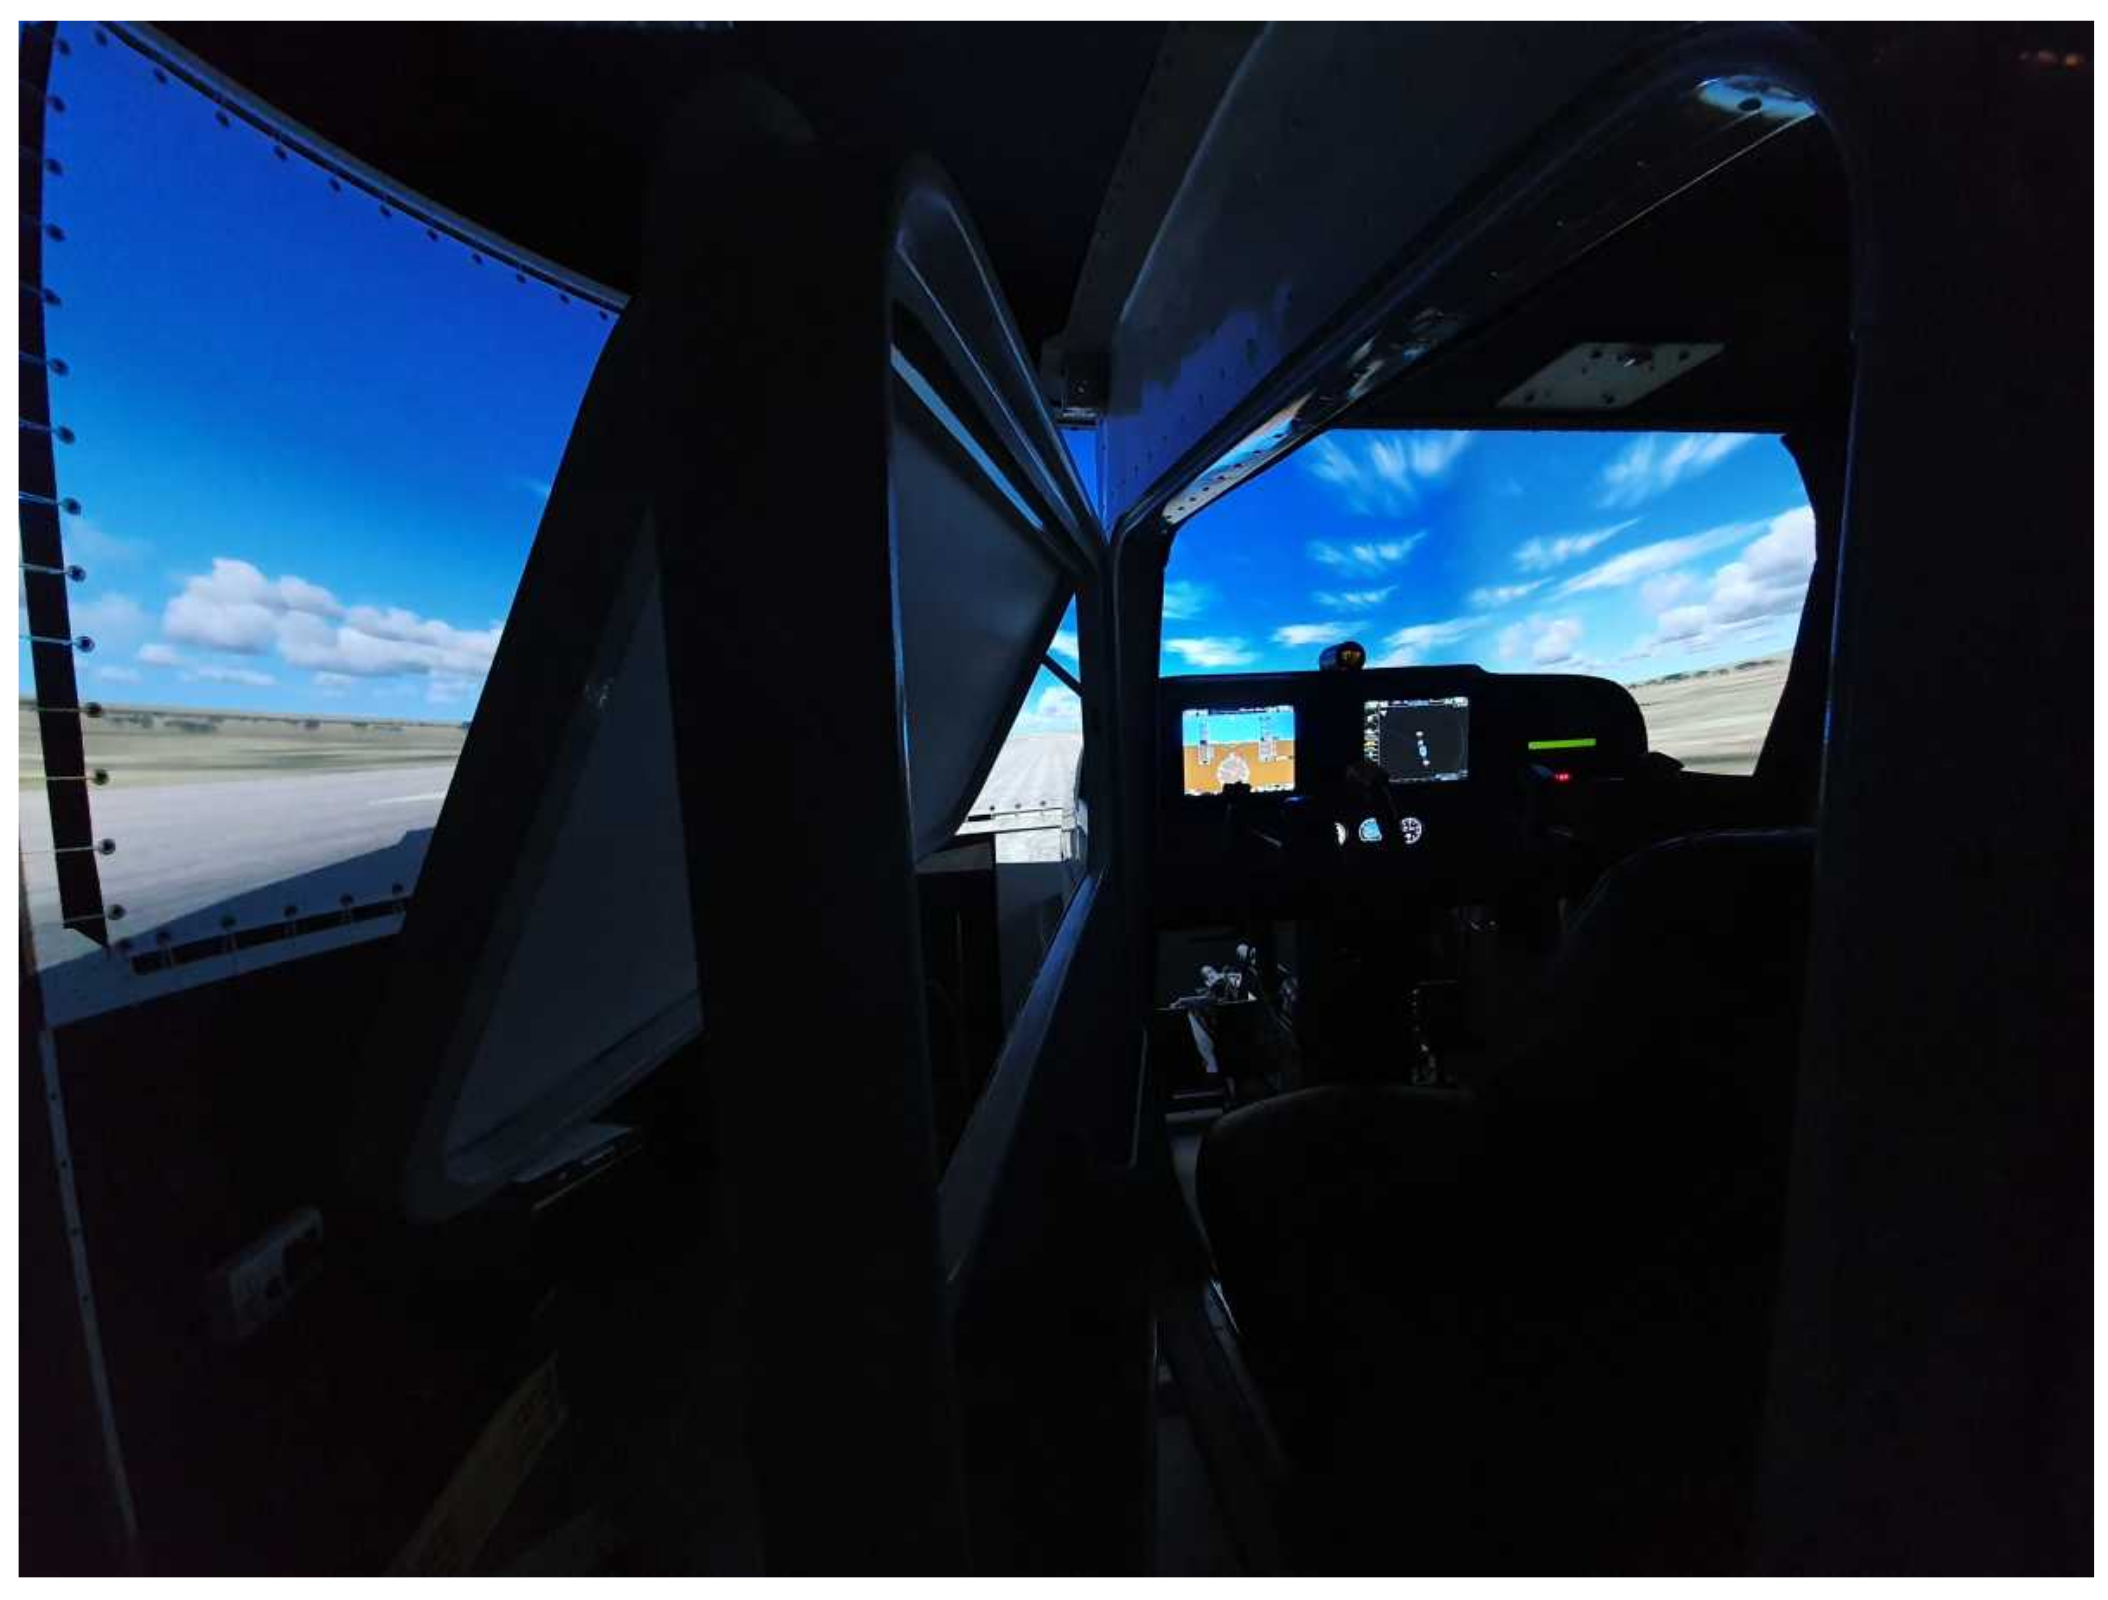 Flight Simulator should make , Google nervous - Protocol